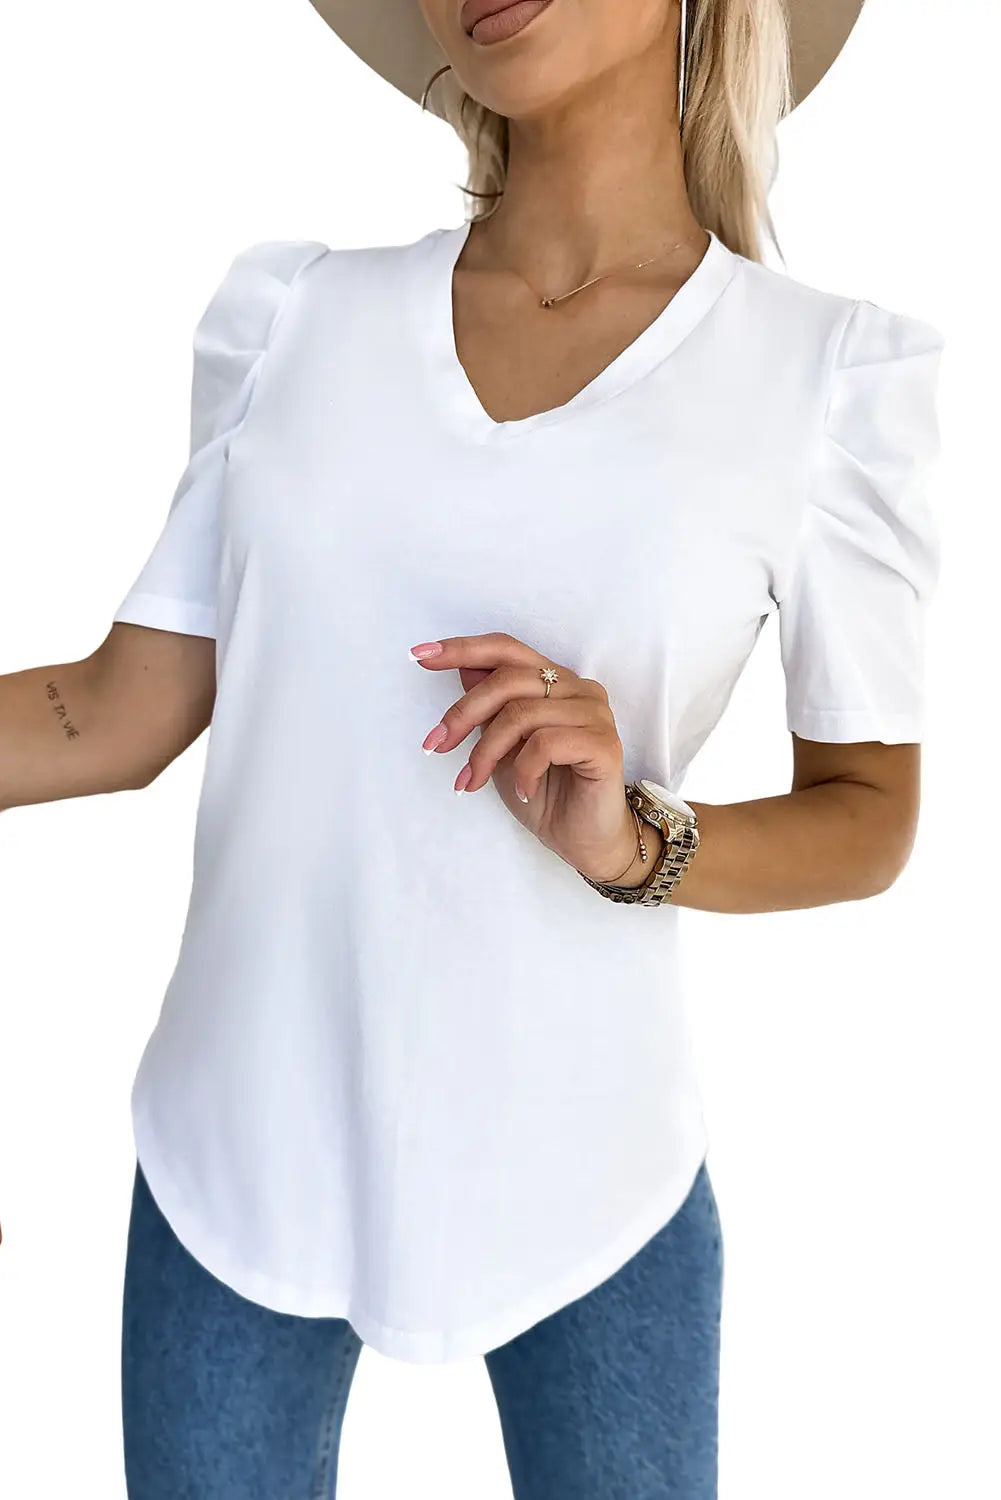 Gray puff sleeve v-neck t-shirt - tops